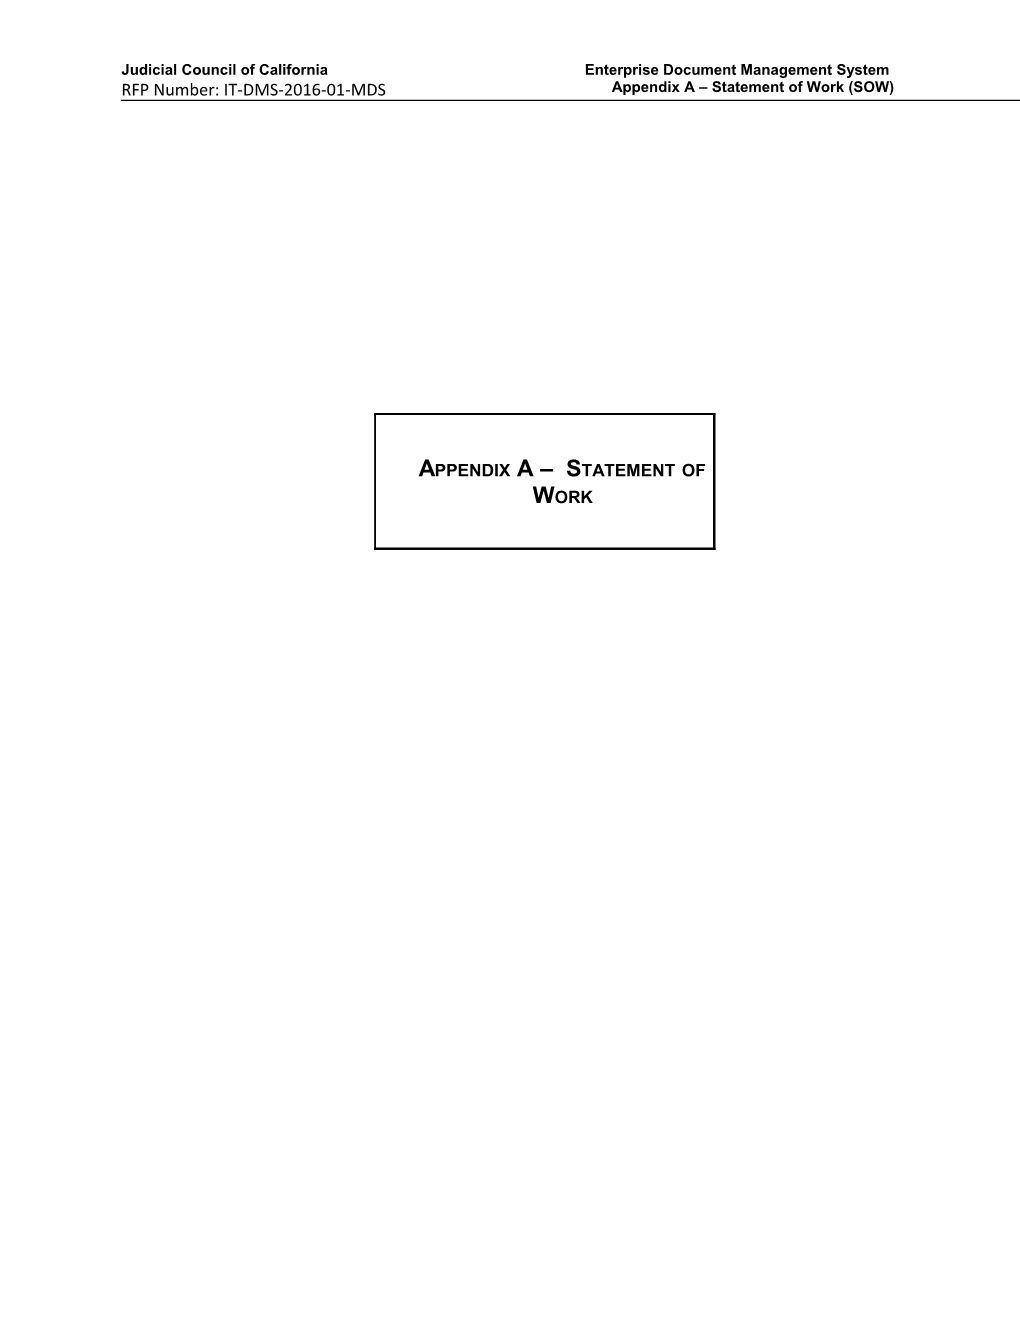 Enterprise Document Management System Appendix a Statement of Work (SOW)